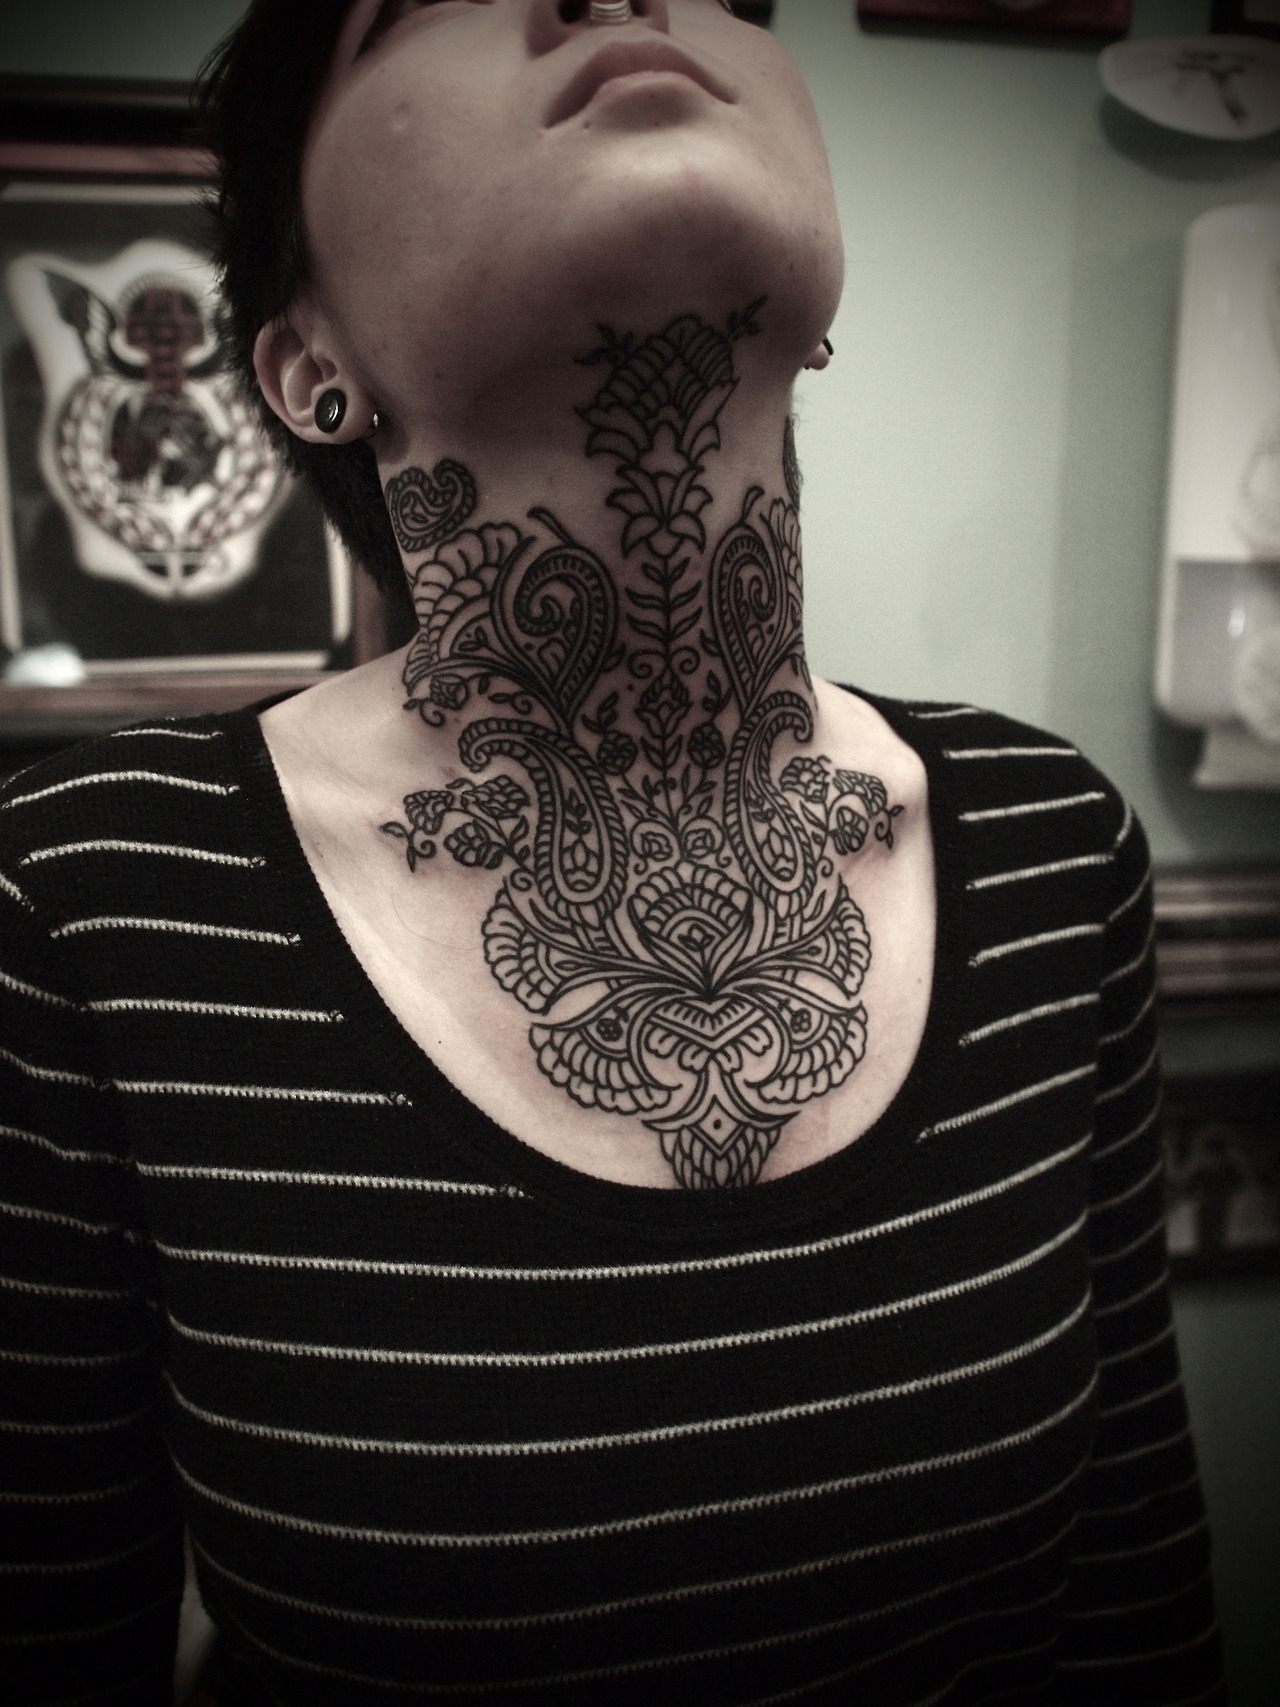 Amazing neck tattoo | Best tattoo design ideas